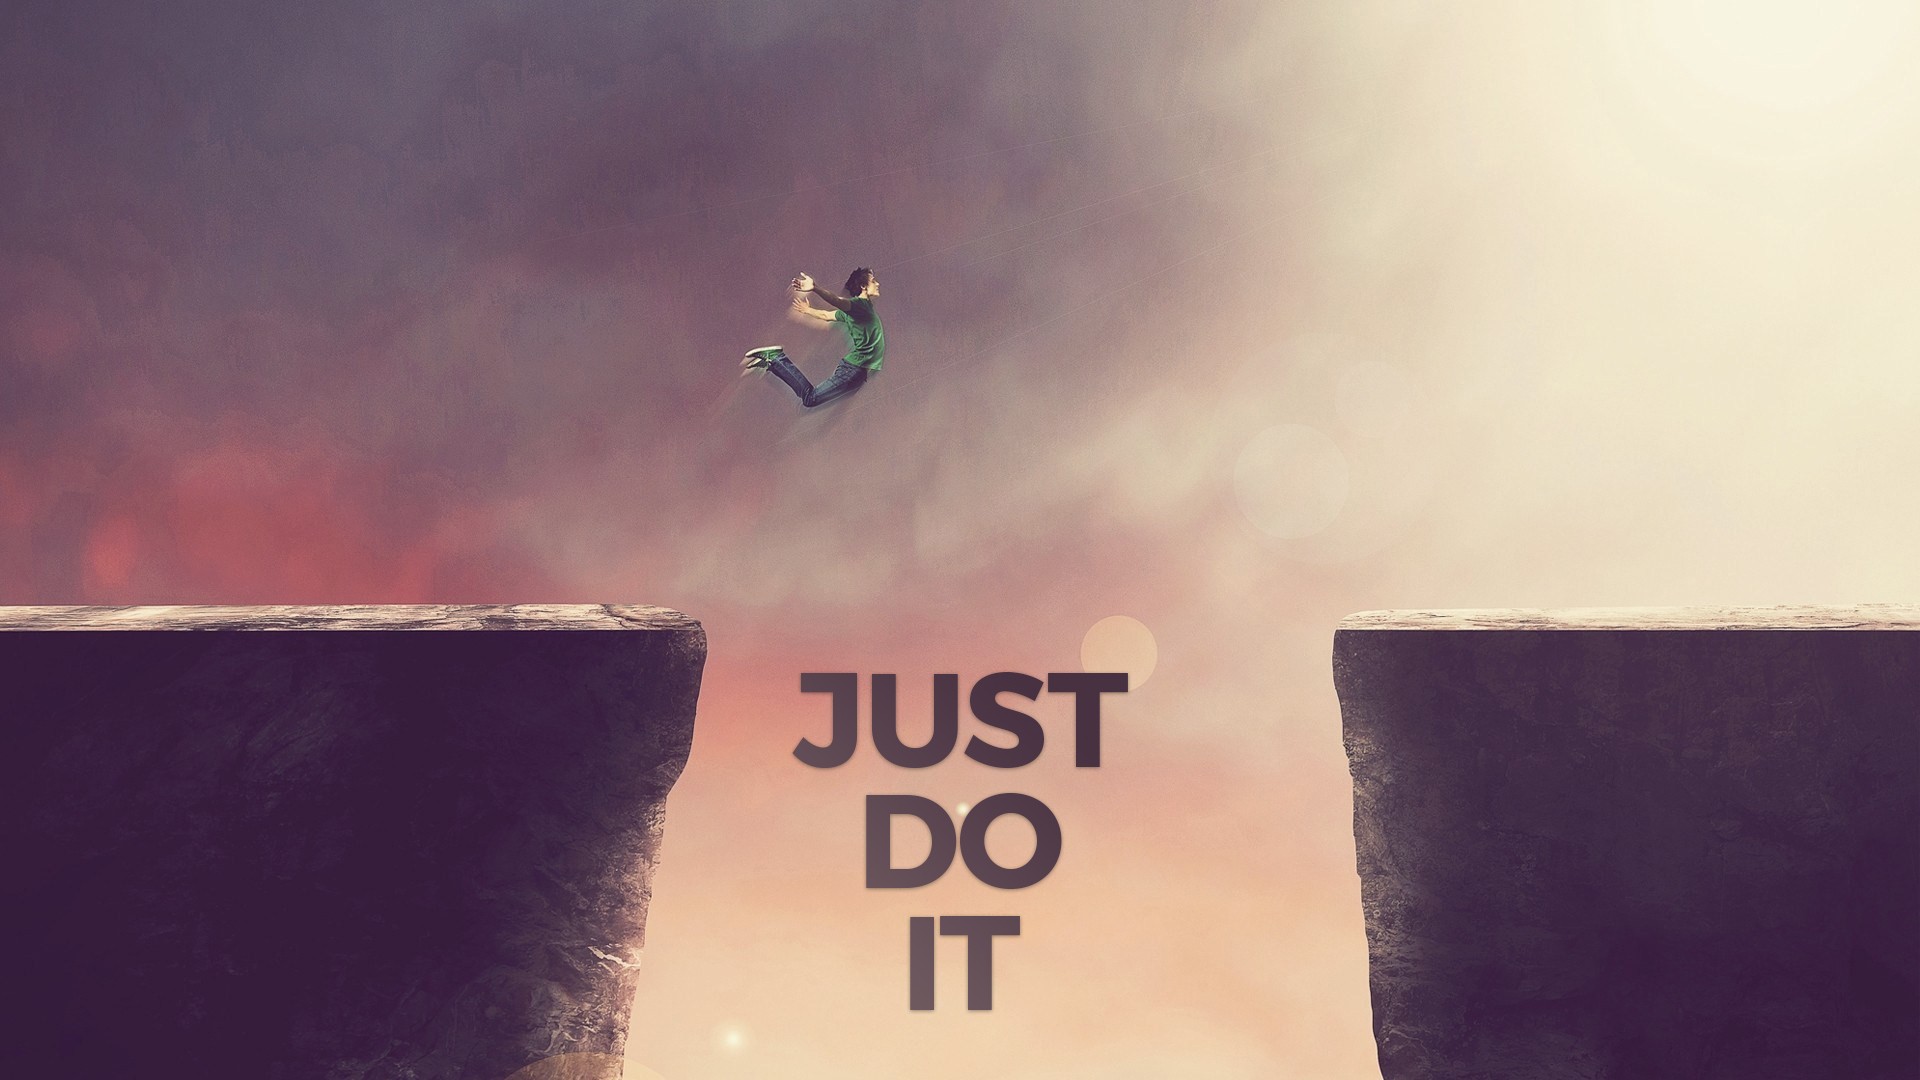 General 1920x1080 motivational Nike jumping men CGI advertisements digital art suicide